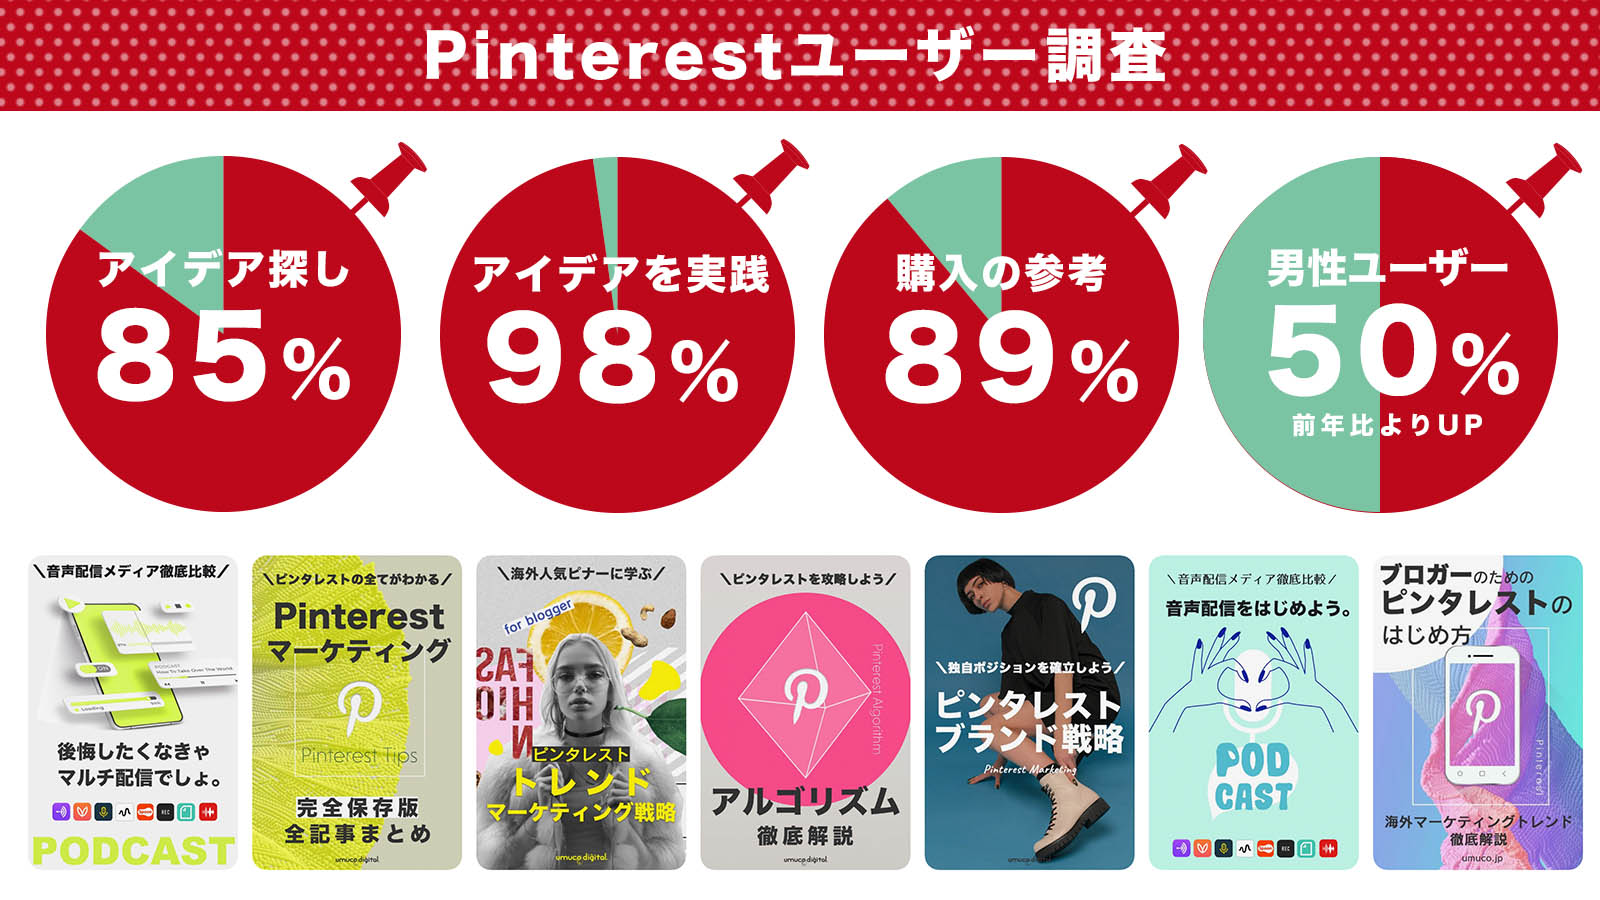 Pinterest国内利用者数